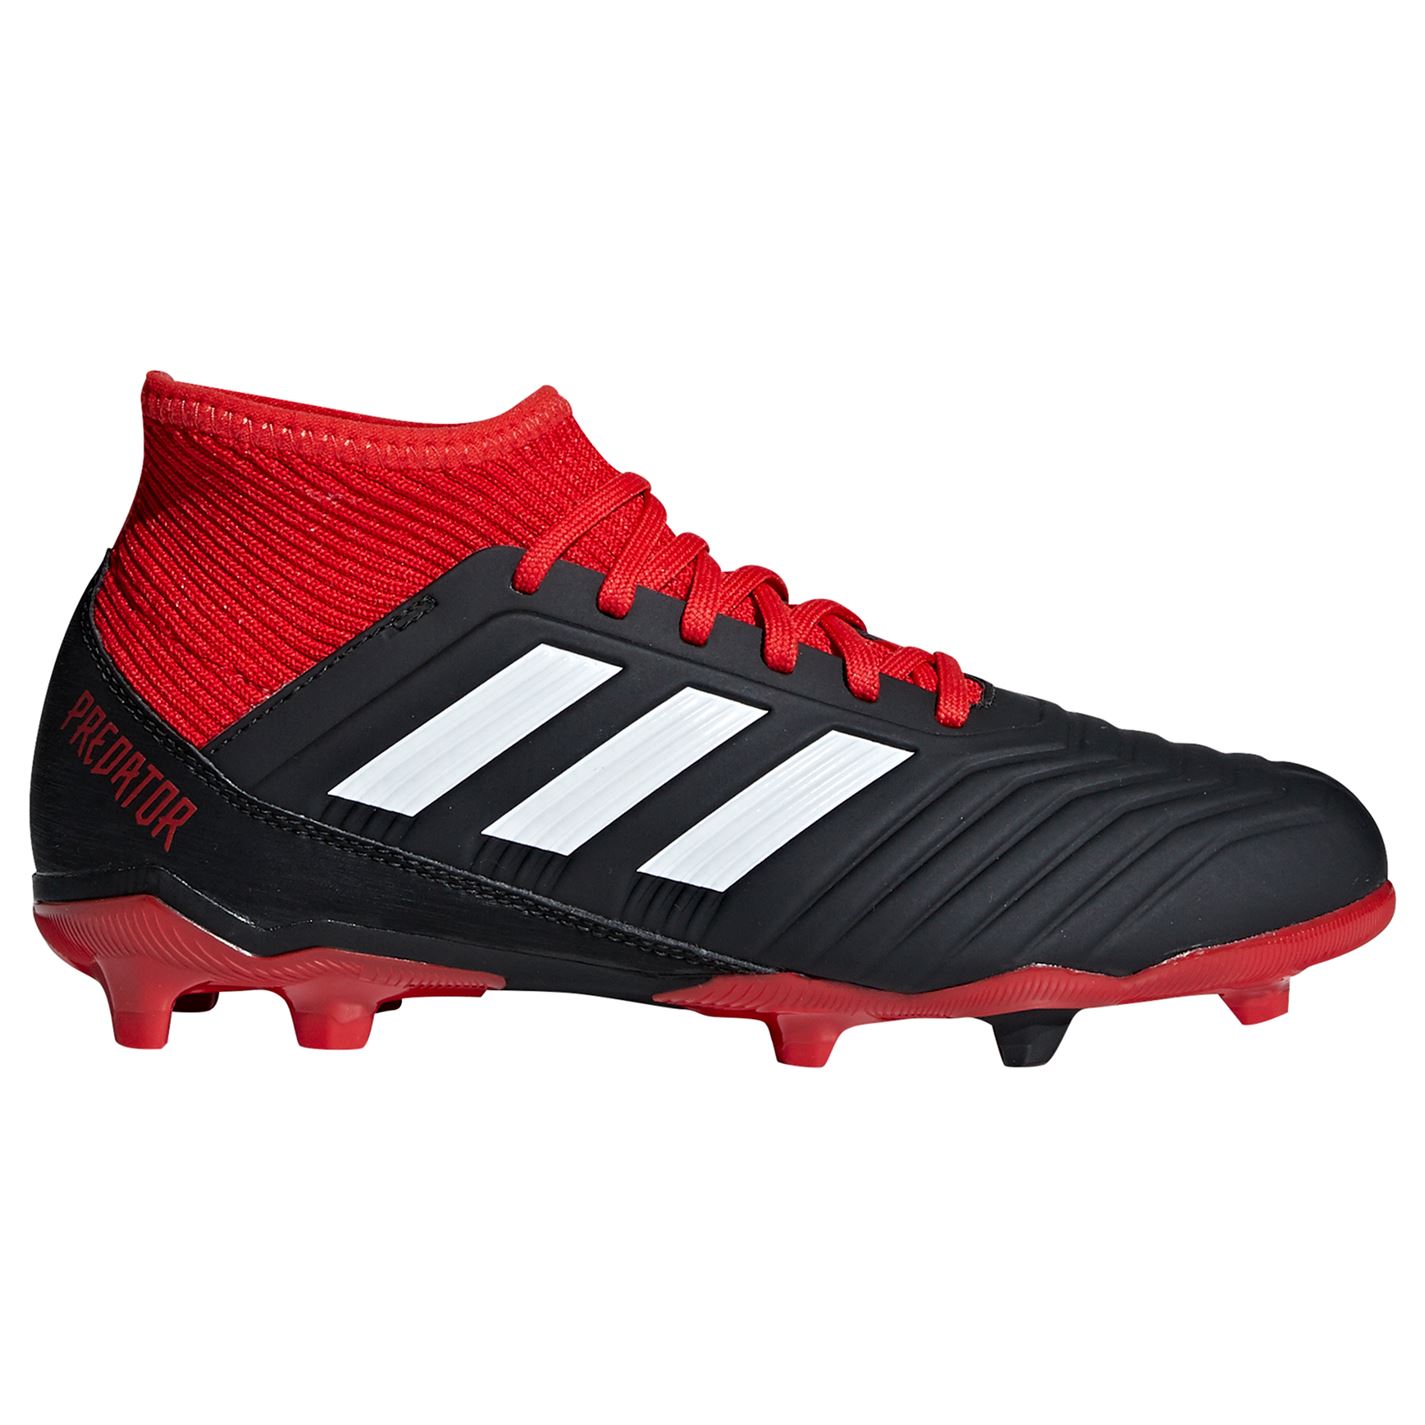 Adidas Predator 18.3 FG Junior’s Football Boots